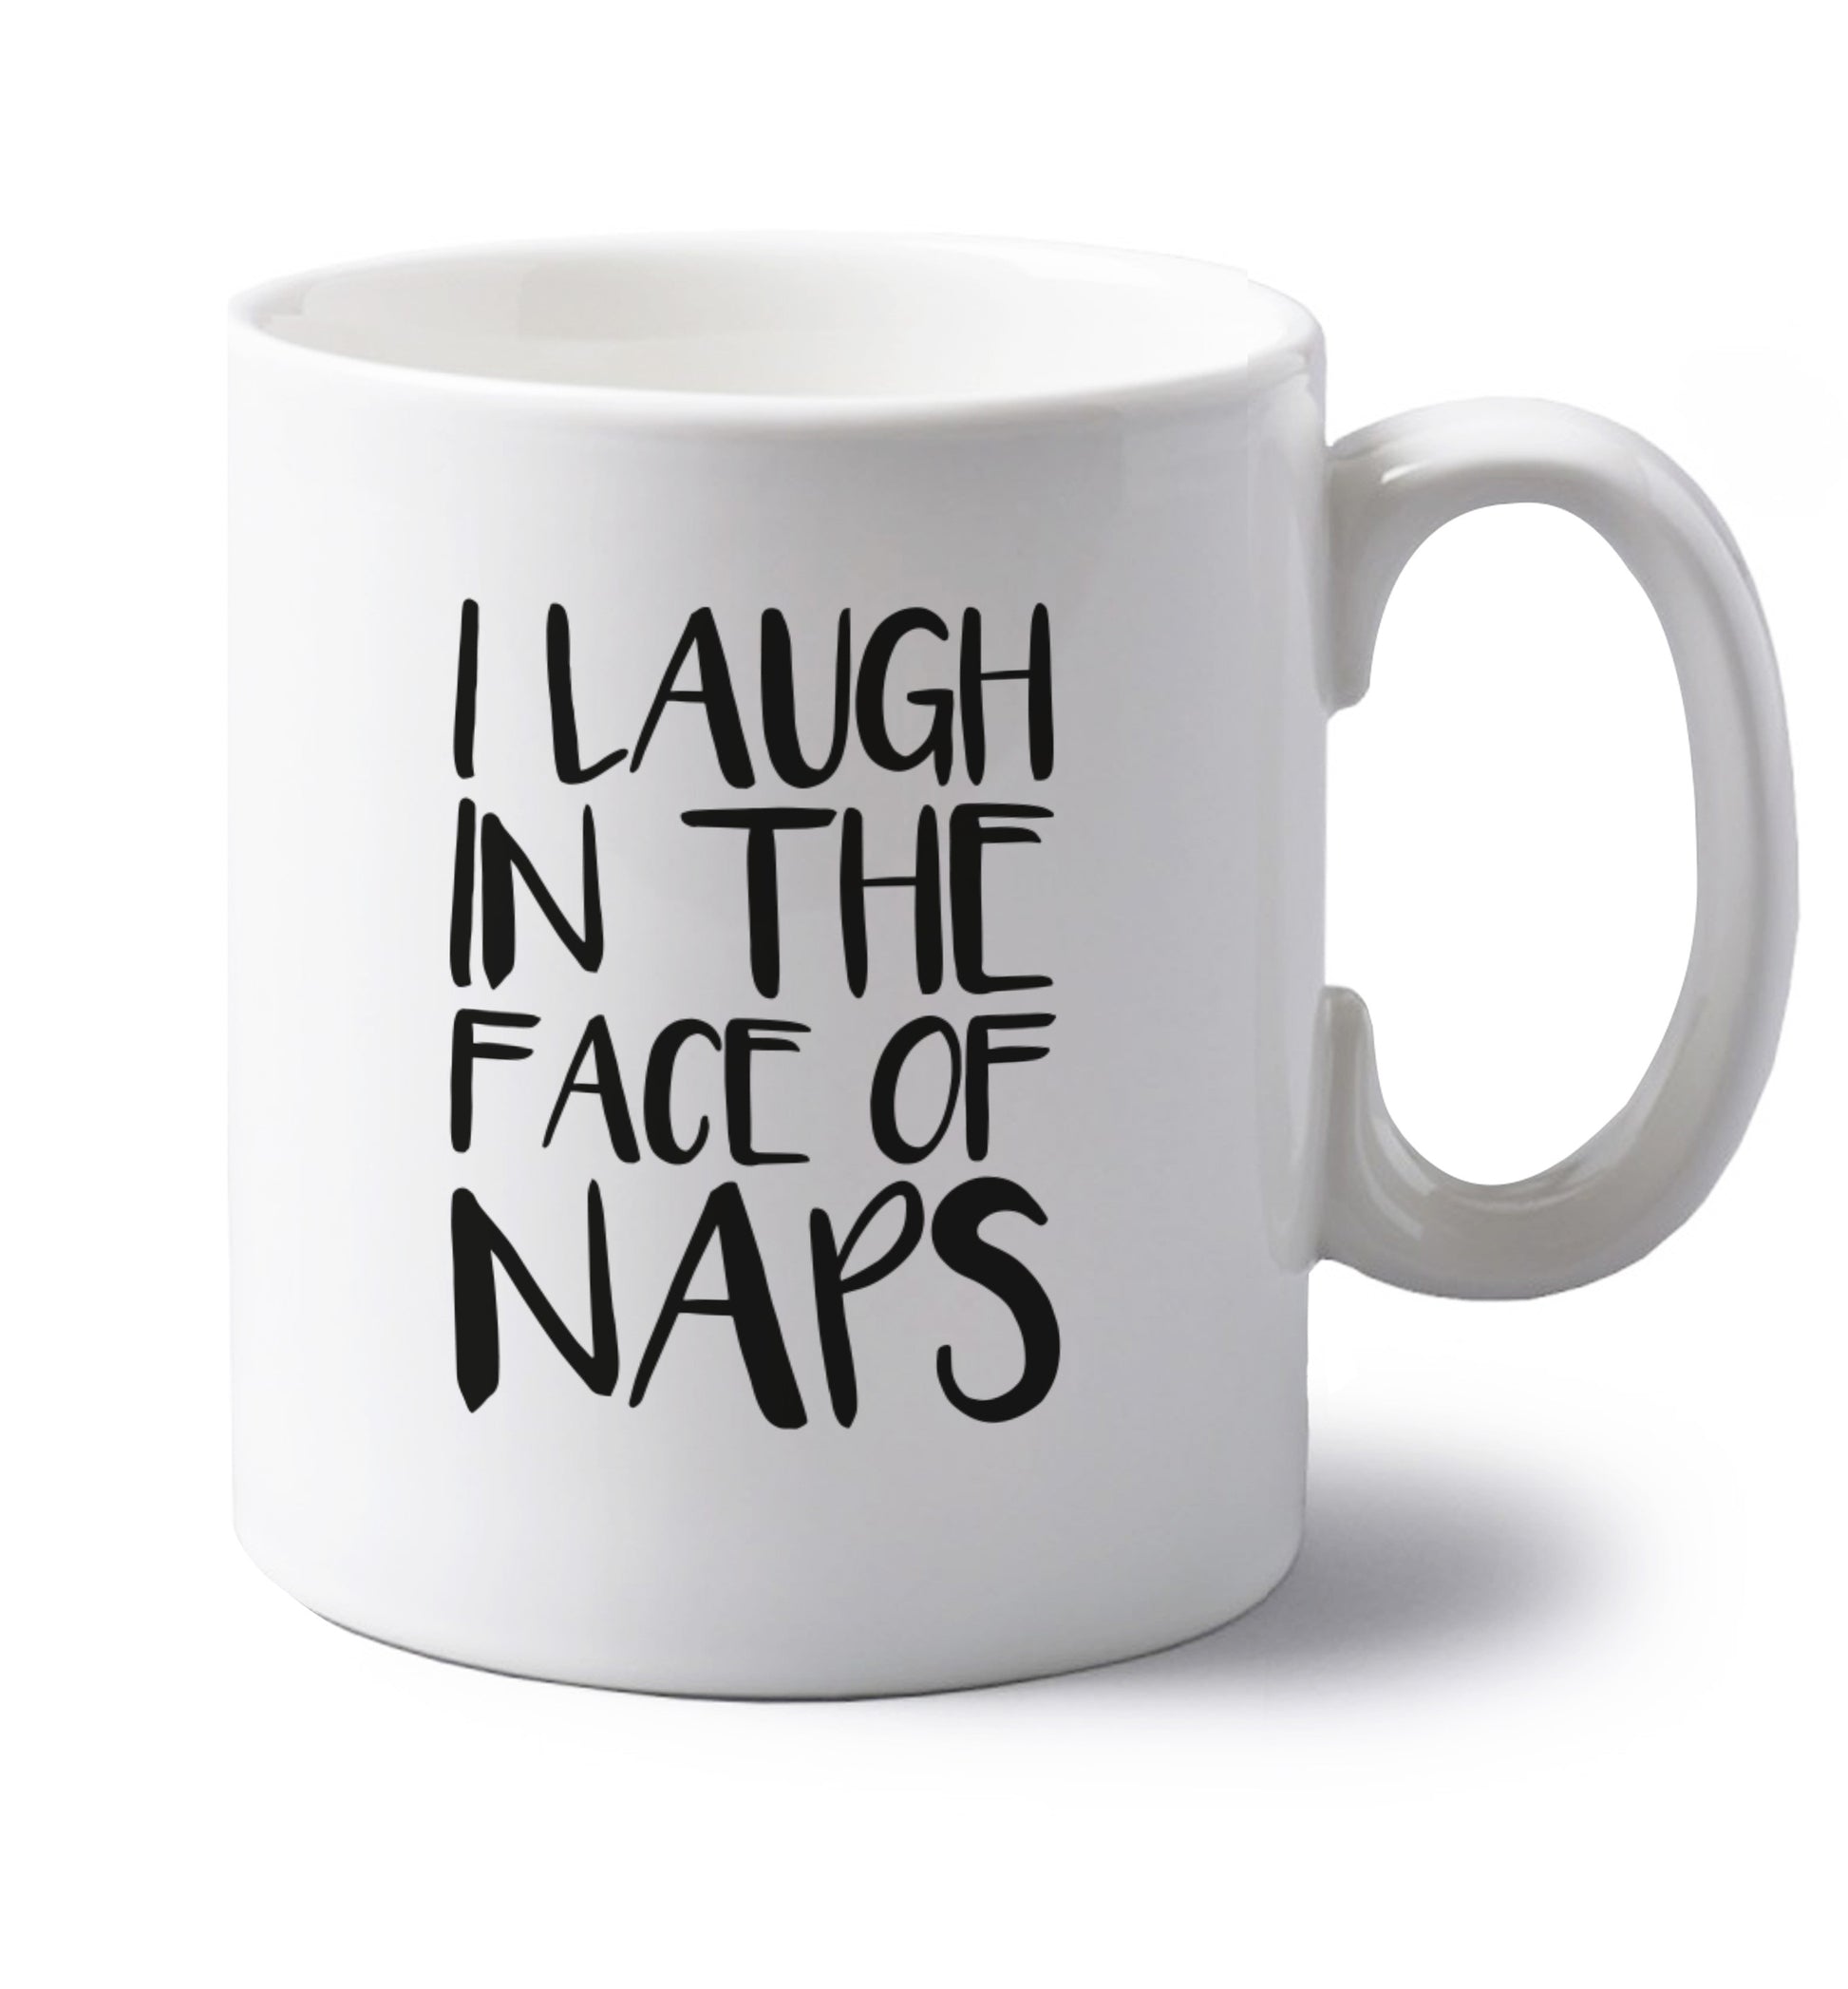 I laugh in the face of naps left handed white ceramic mug 